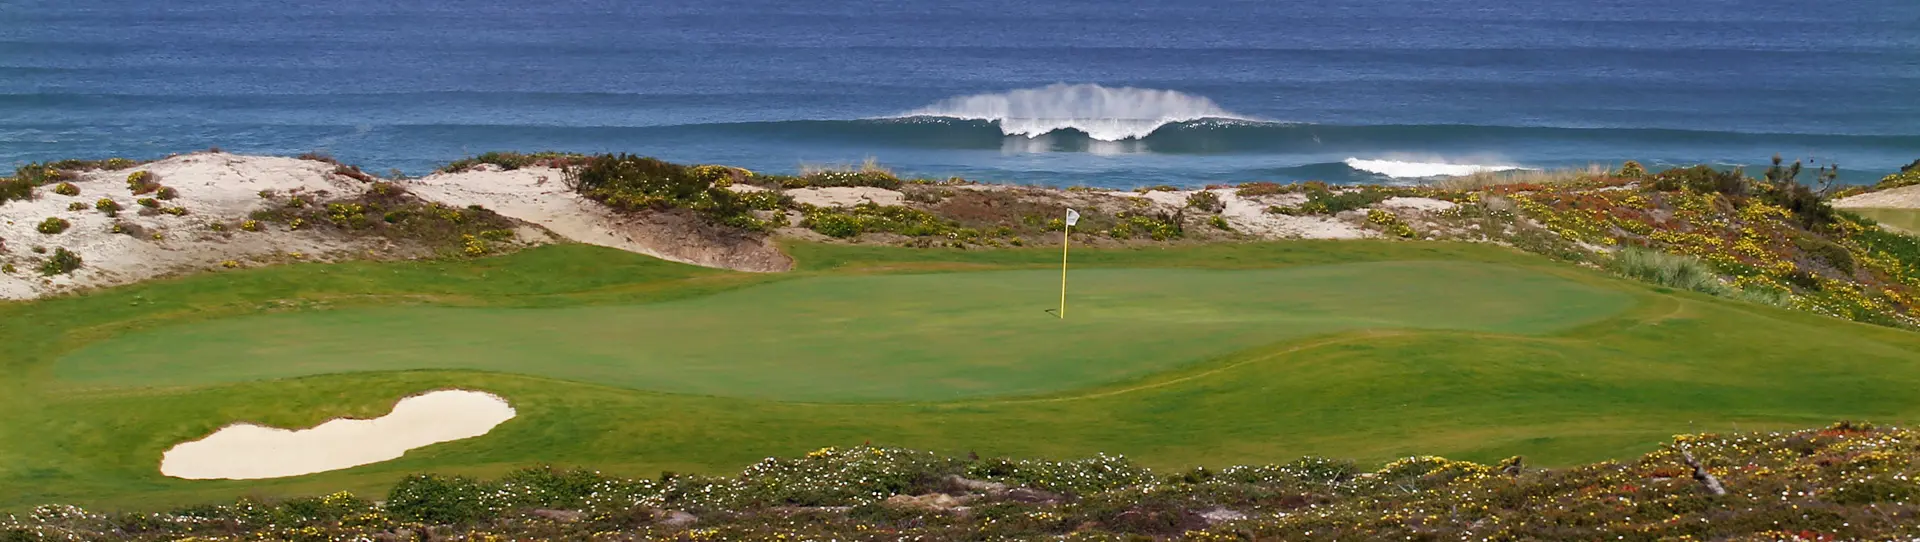 Portugal golf courses - West Cliffs Golf Links - Photo 1